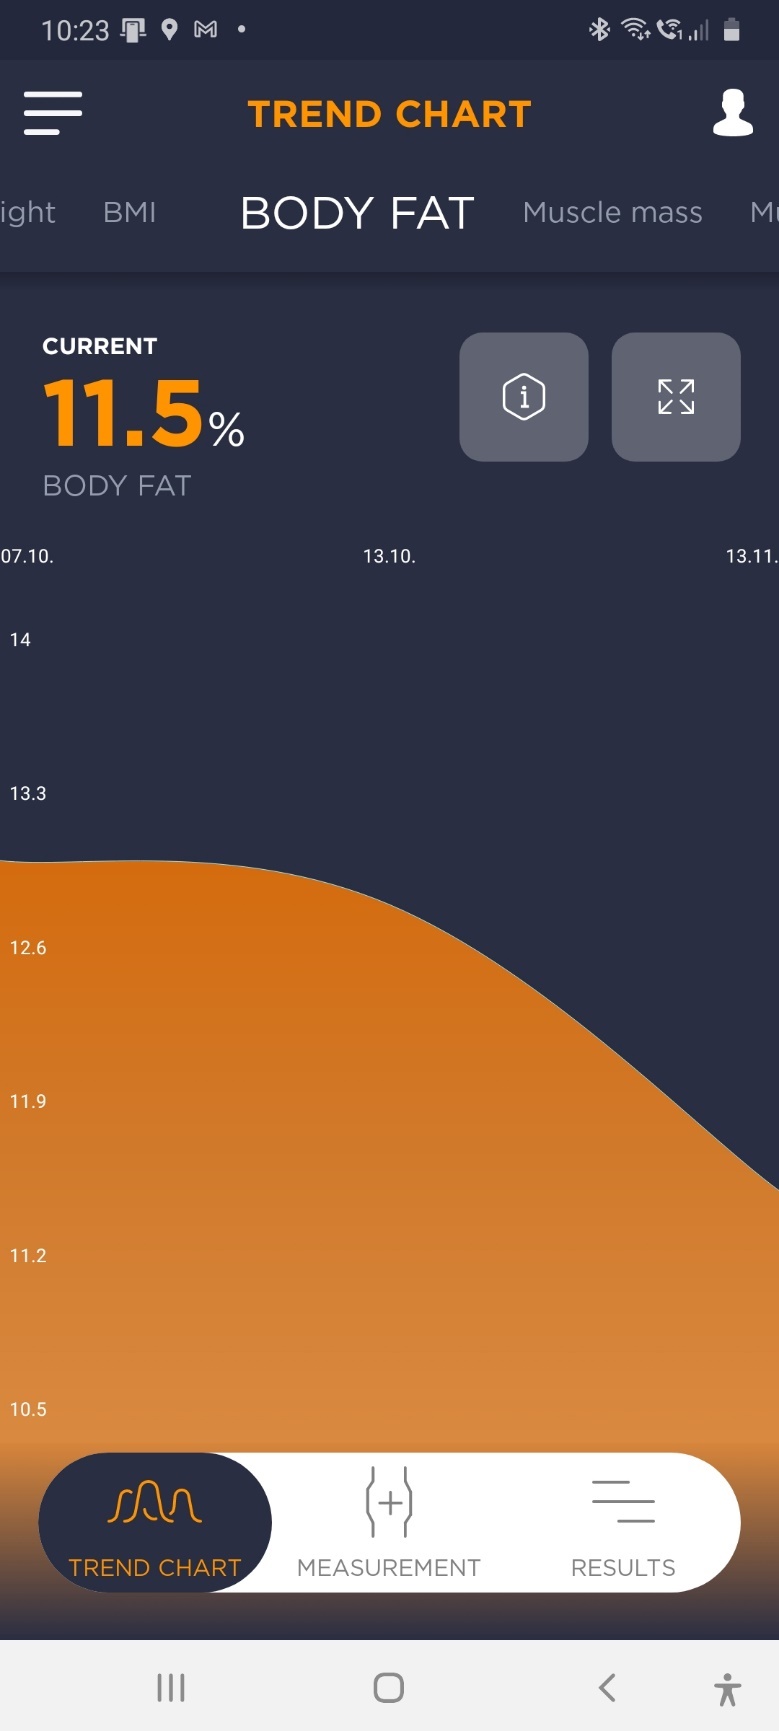 Tanita BC-401 Body Composition Monitor